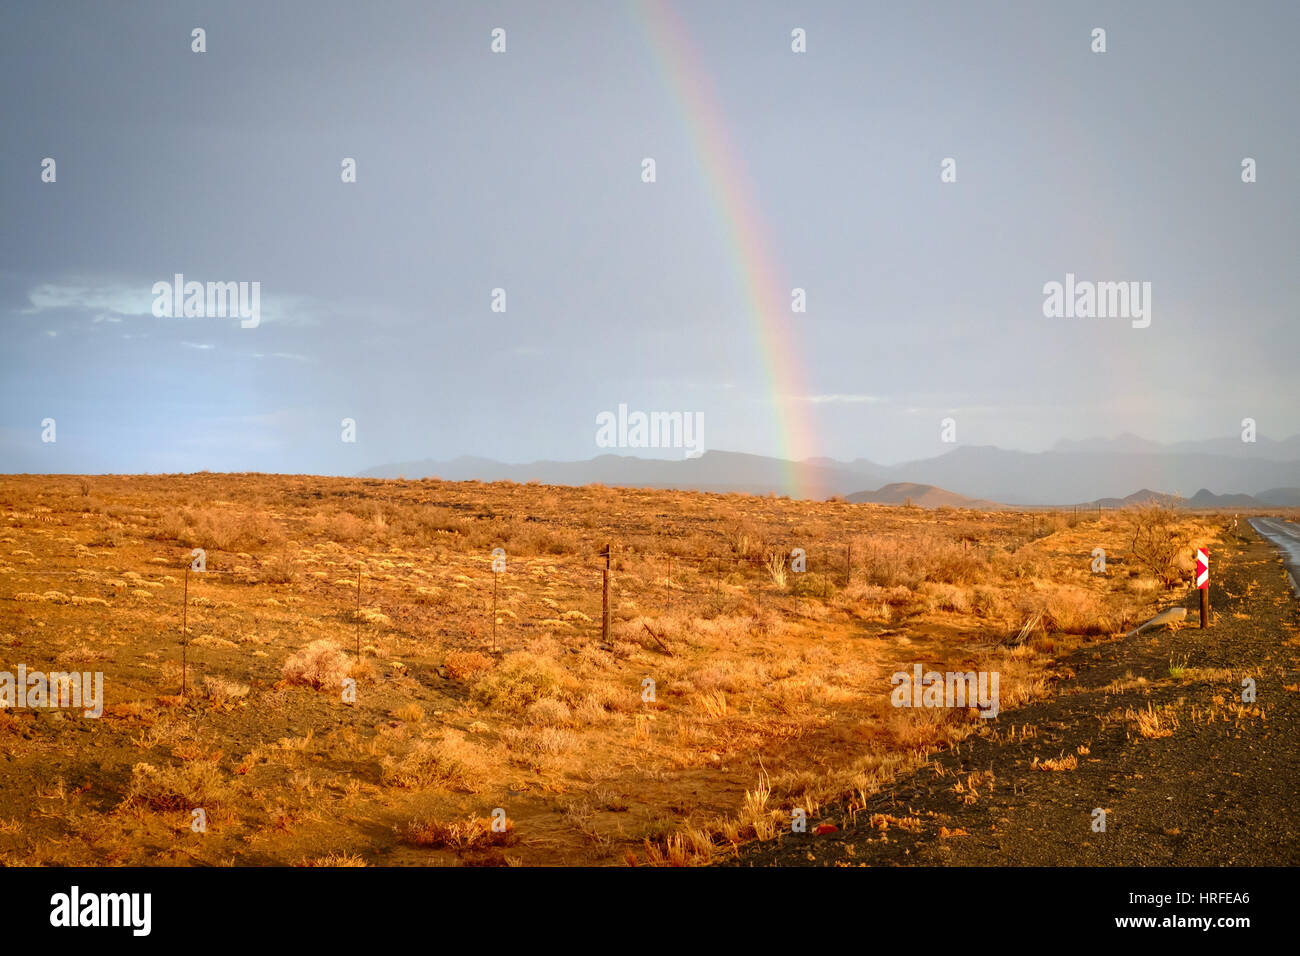 A rainbow over the Karoo desert near Prince Albert, South Africa, after a rain storm Stock Photo